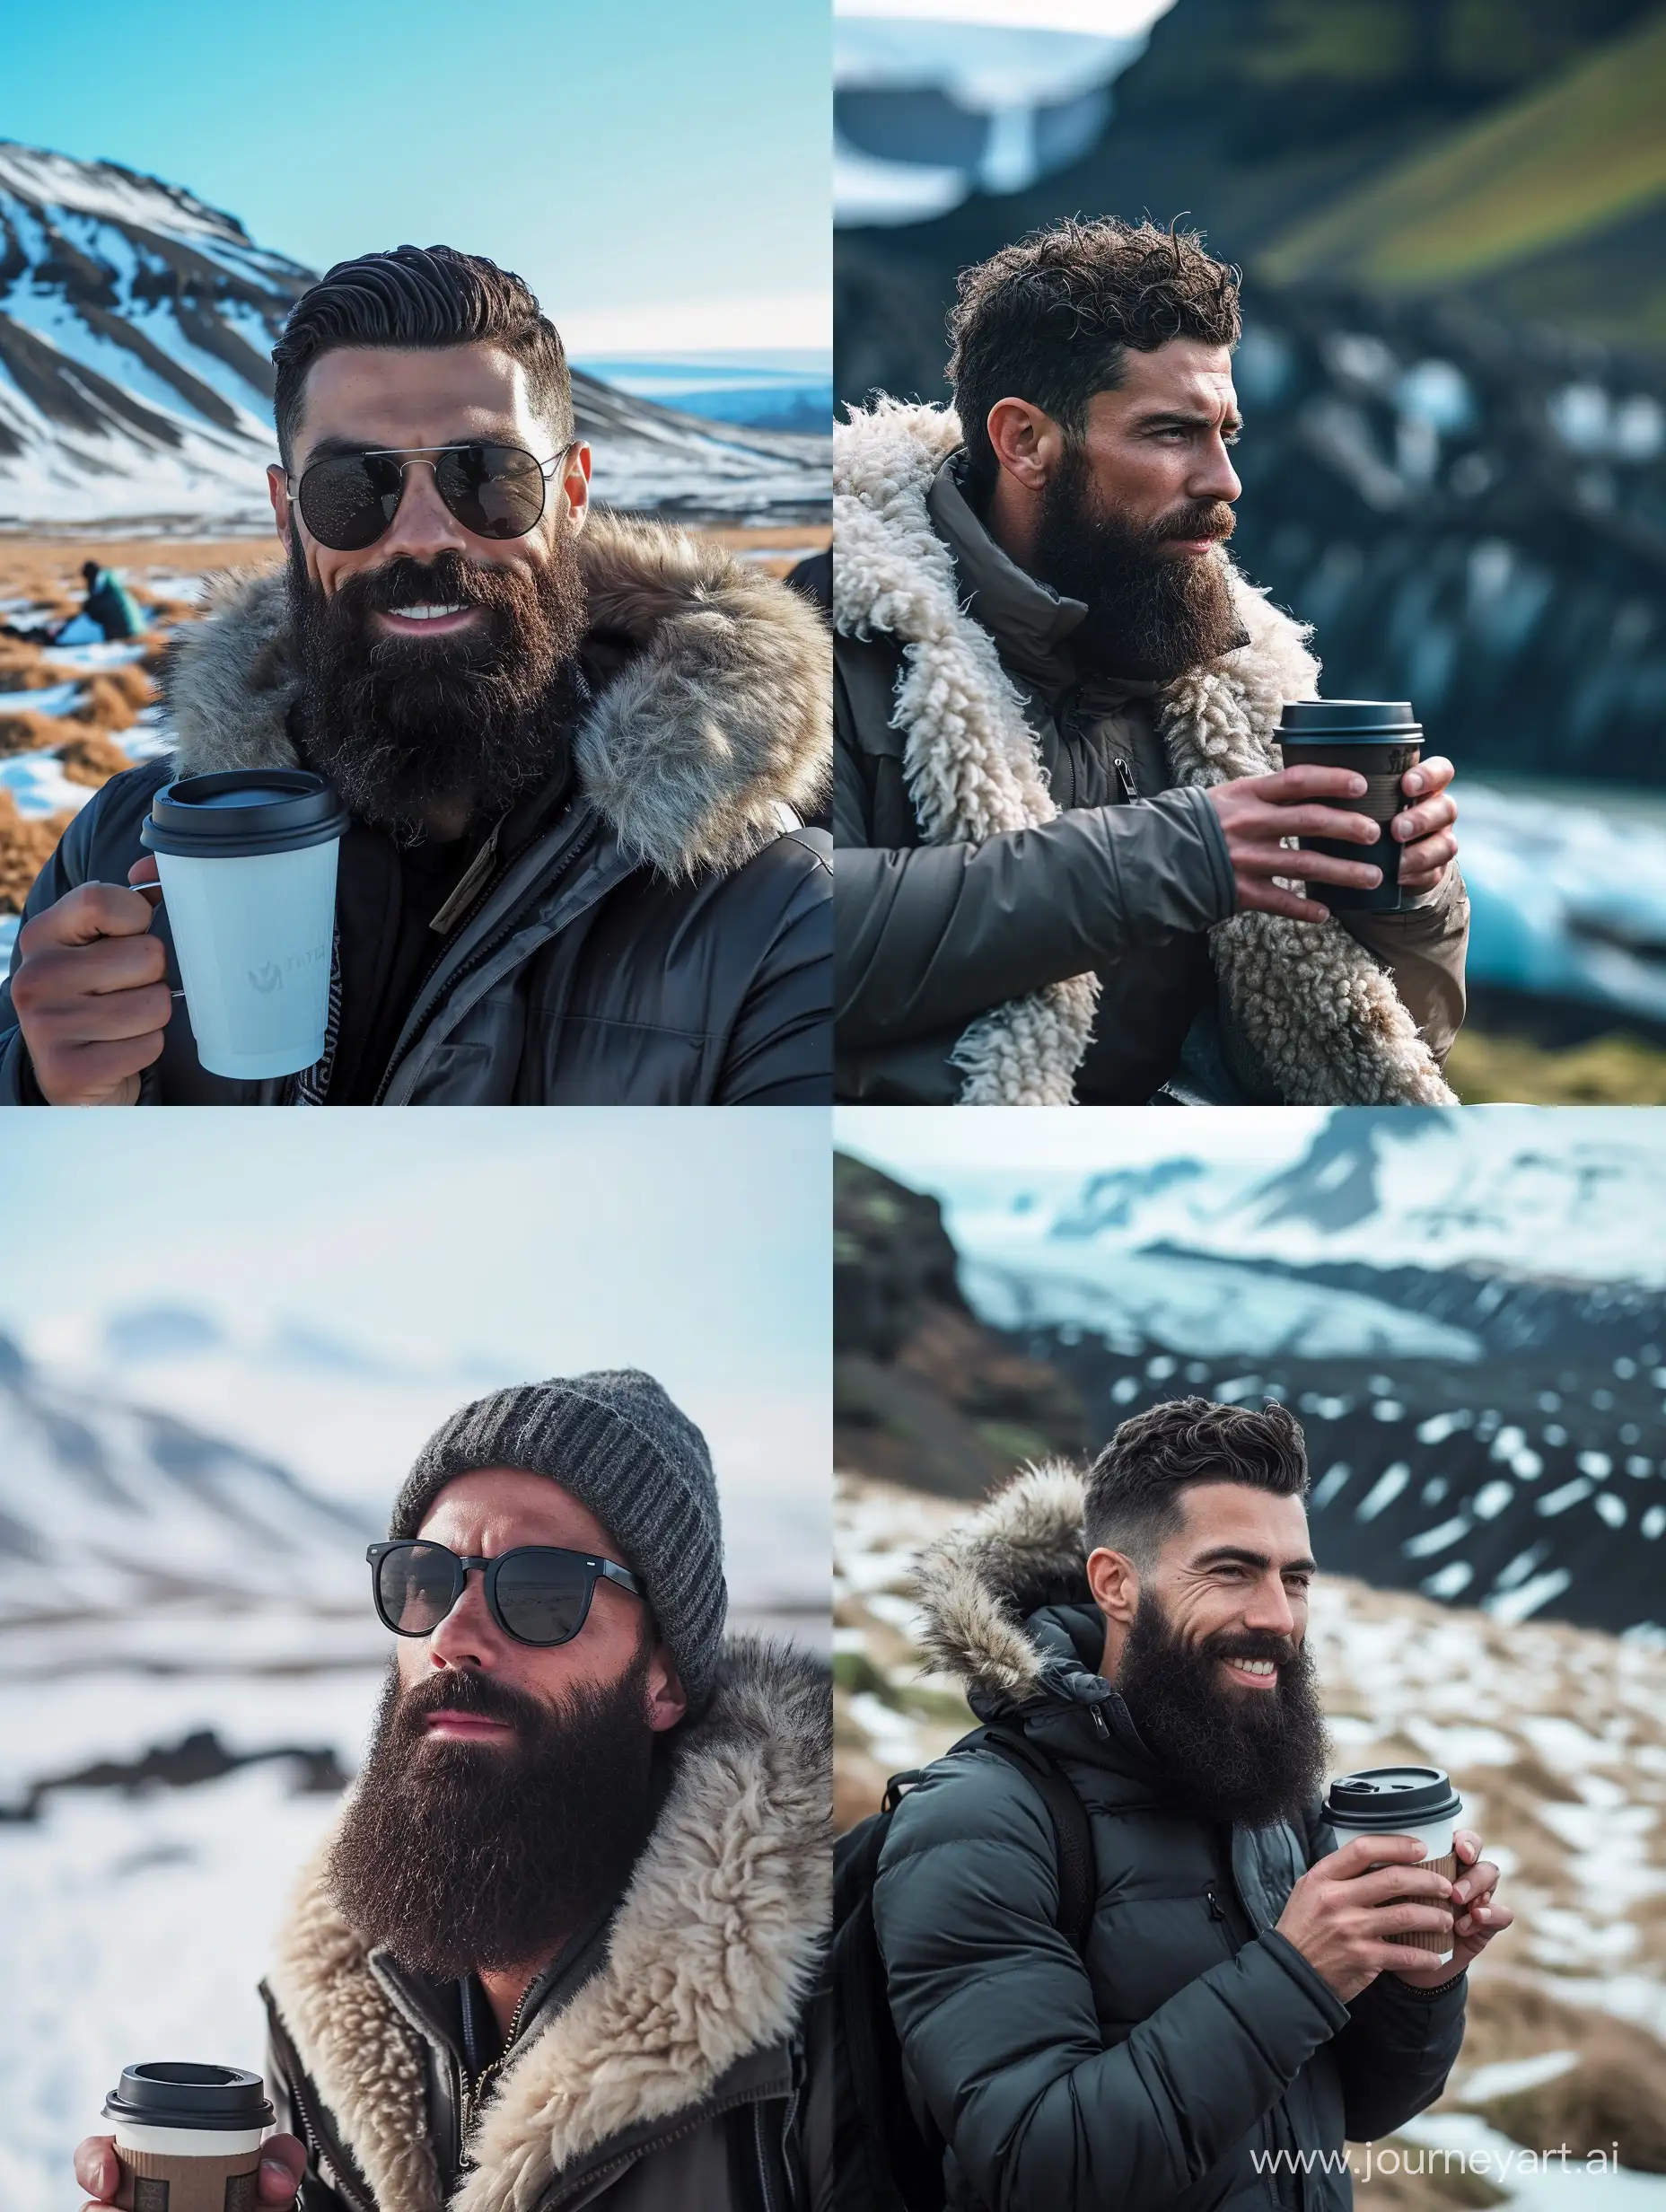 Ronaldo having beards and drinking coffee in Iceland. Midjourney style